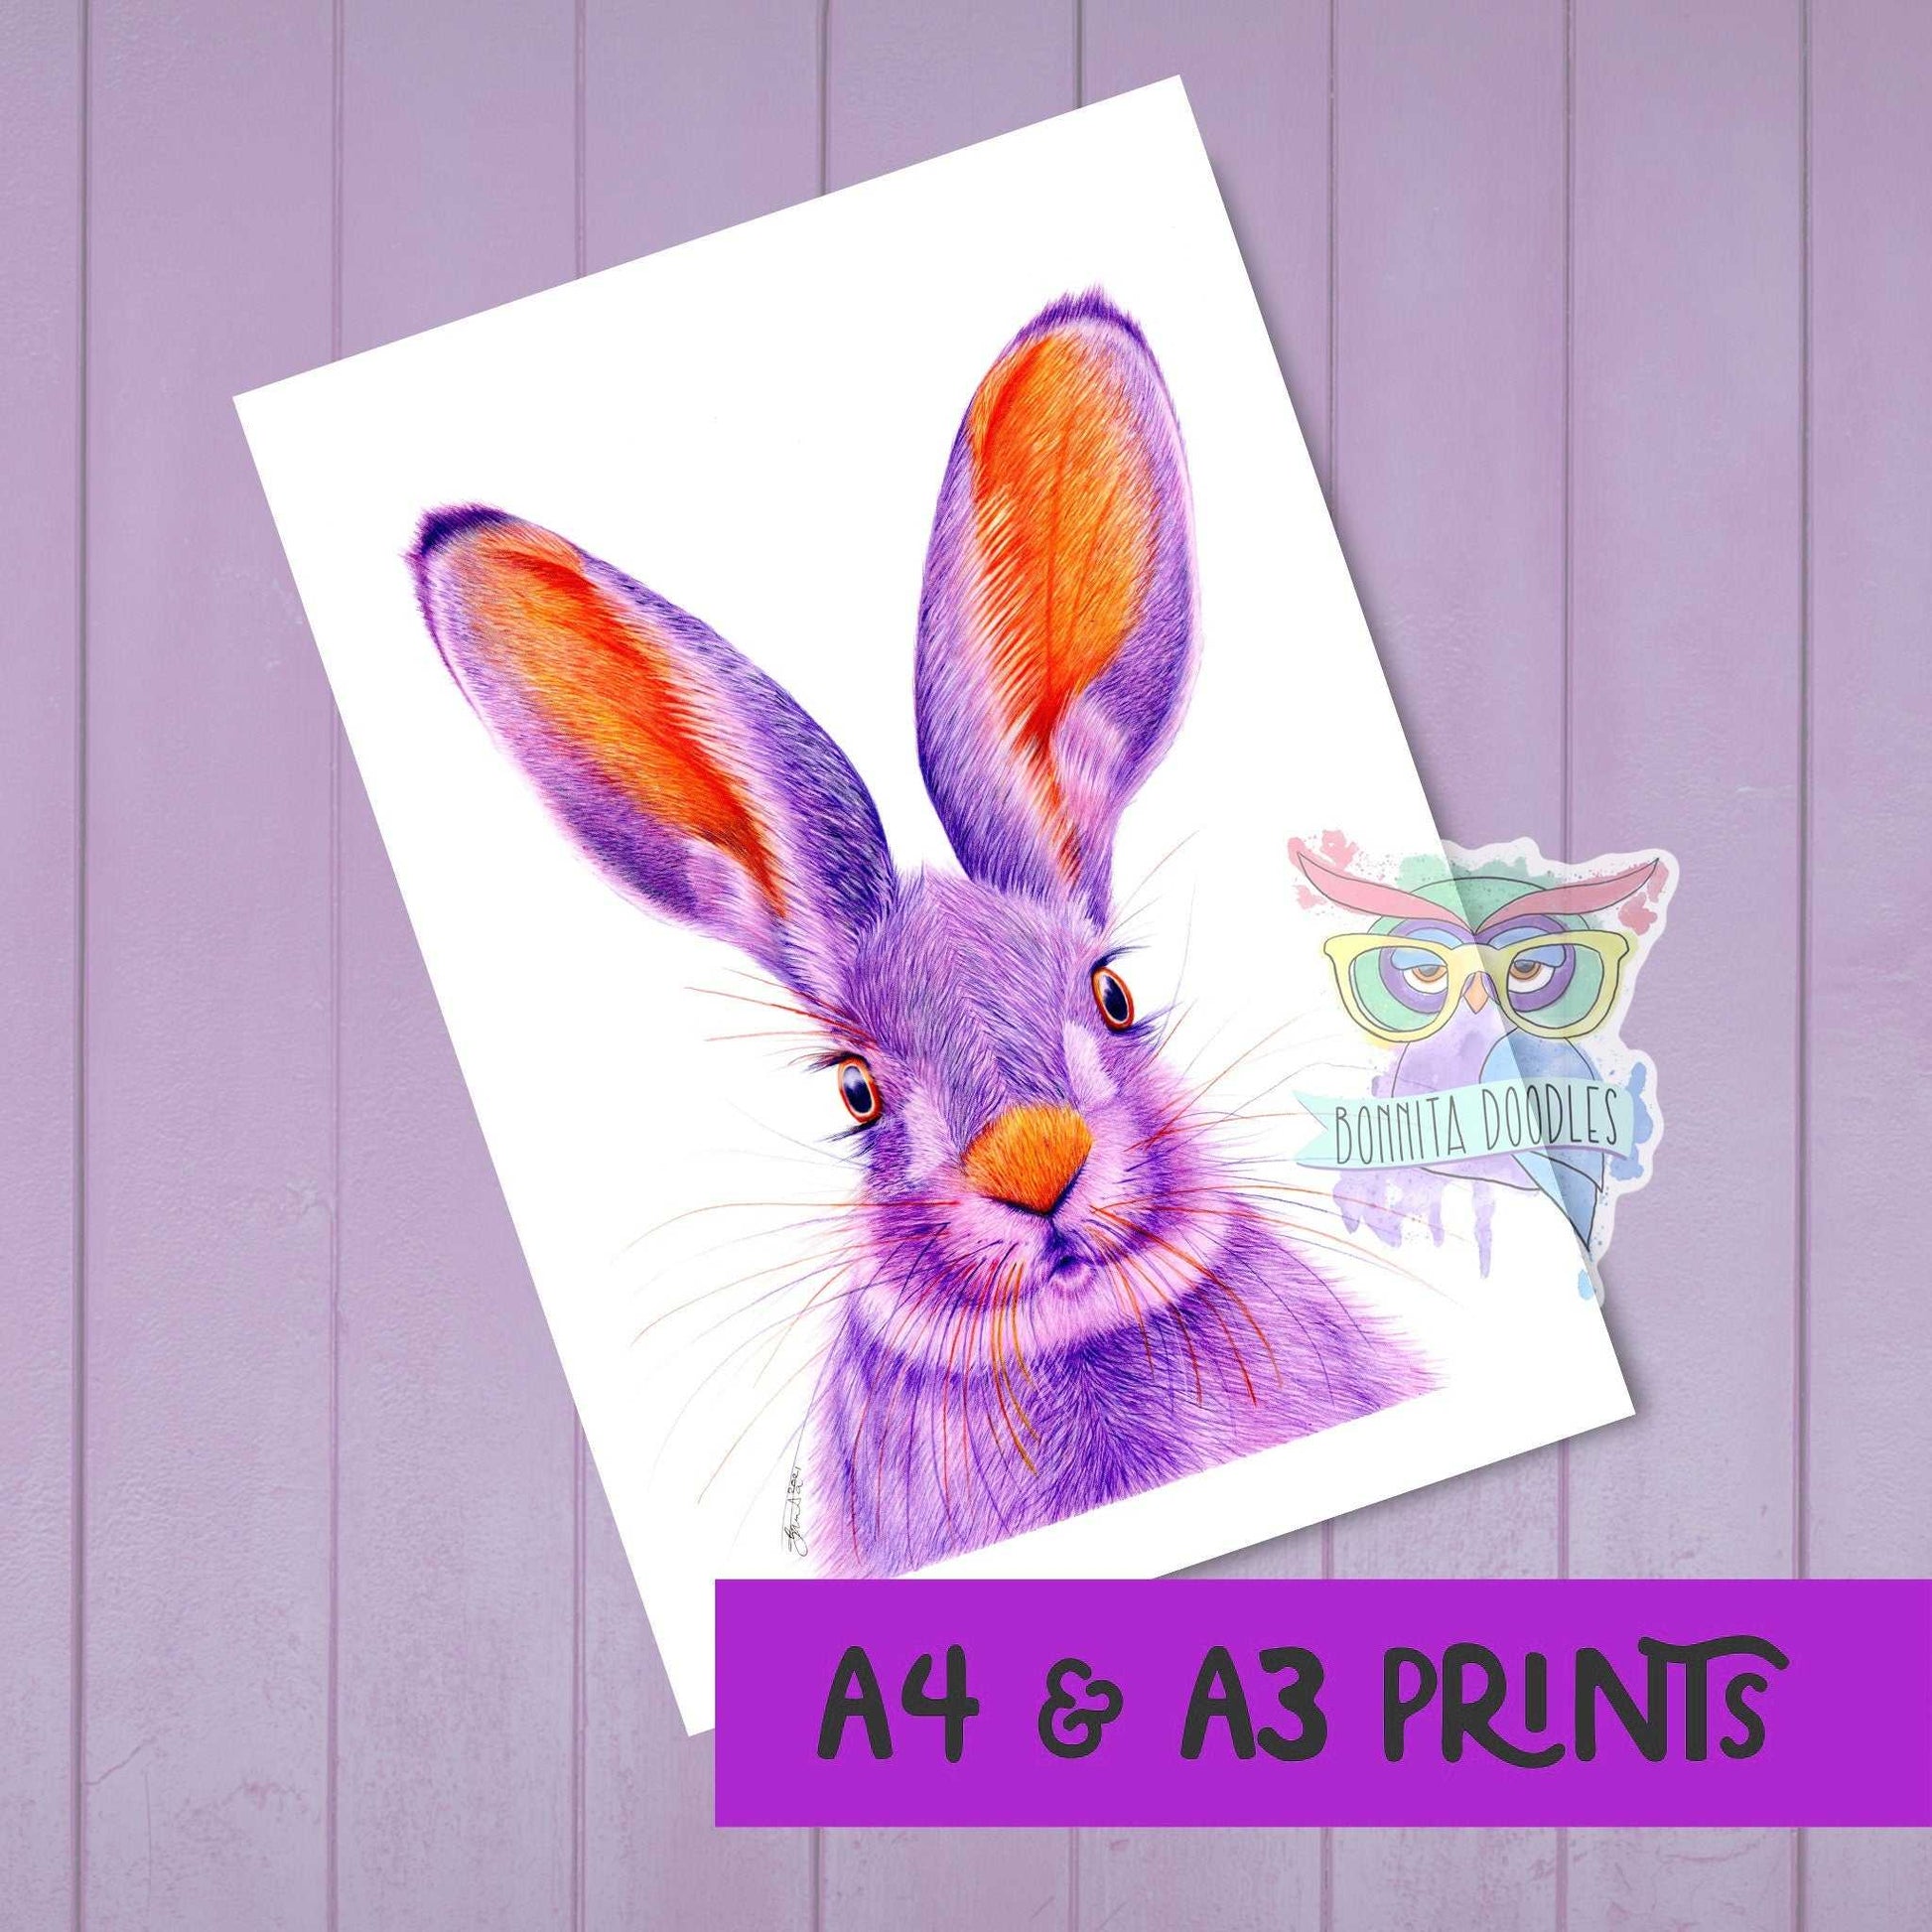 Amethyst Hare print. Home decor art print